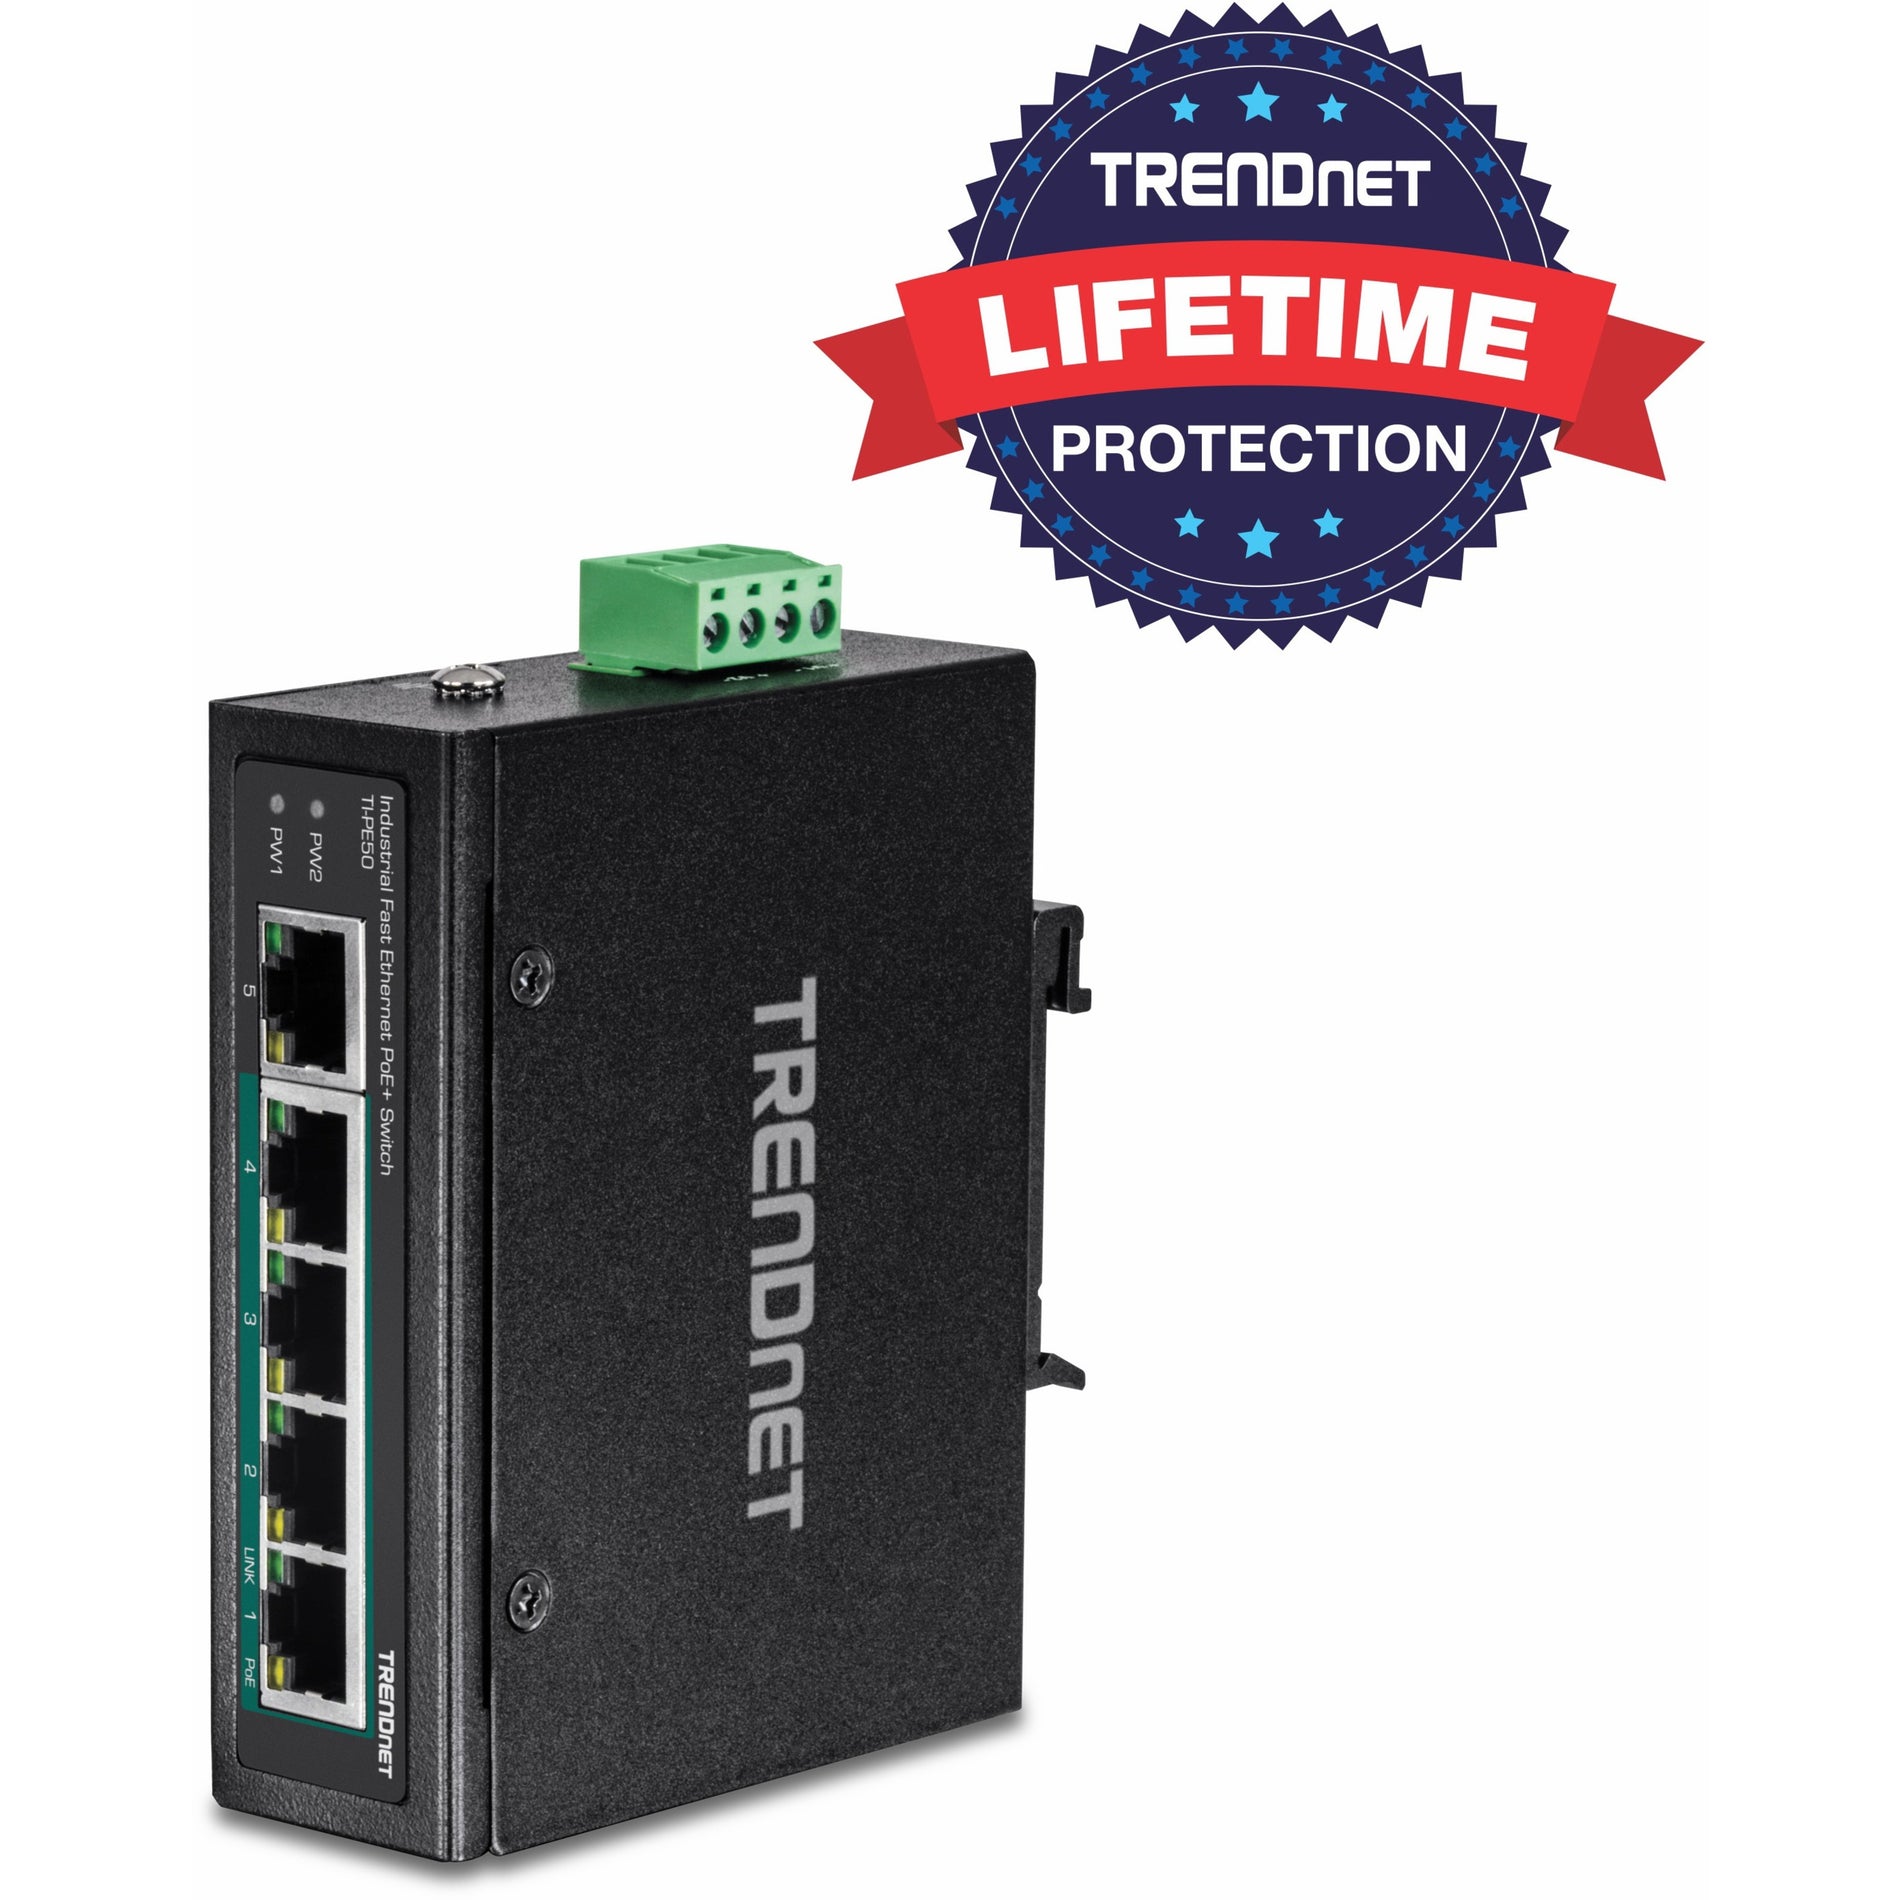 TRENDnet TI-PE50 5-Port Industrial Fast Ethernet PoE+ DIN-Rail Switch, 4 x Fast Ethernet PoE+ Ports, 1 x Fast Ethernet Port, 90W PoE Power Budget, DIN-Rail, IP30 Rated, Lifetime Protection, Black